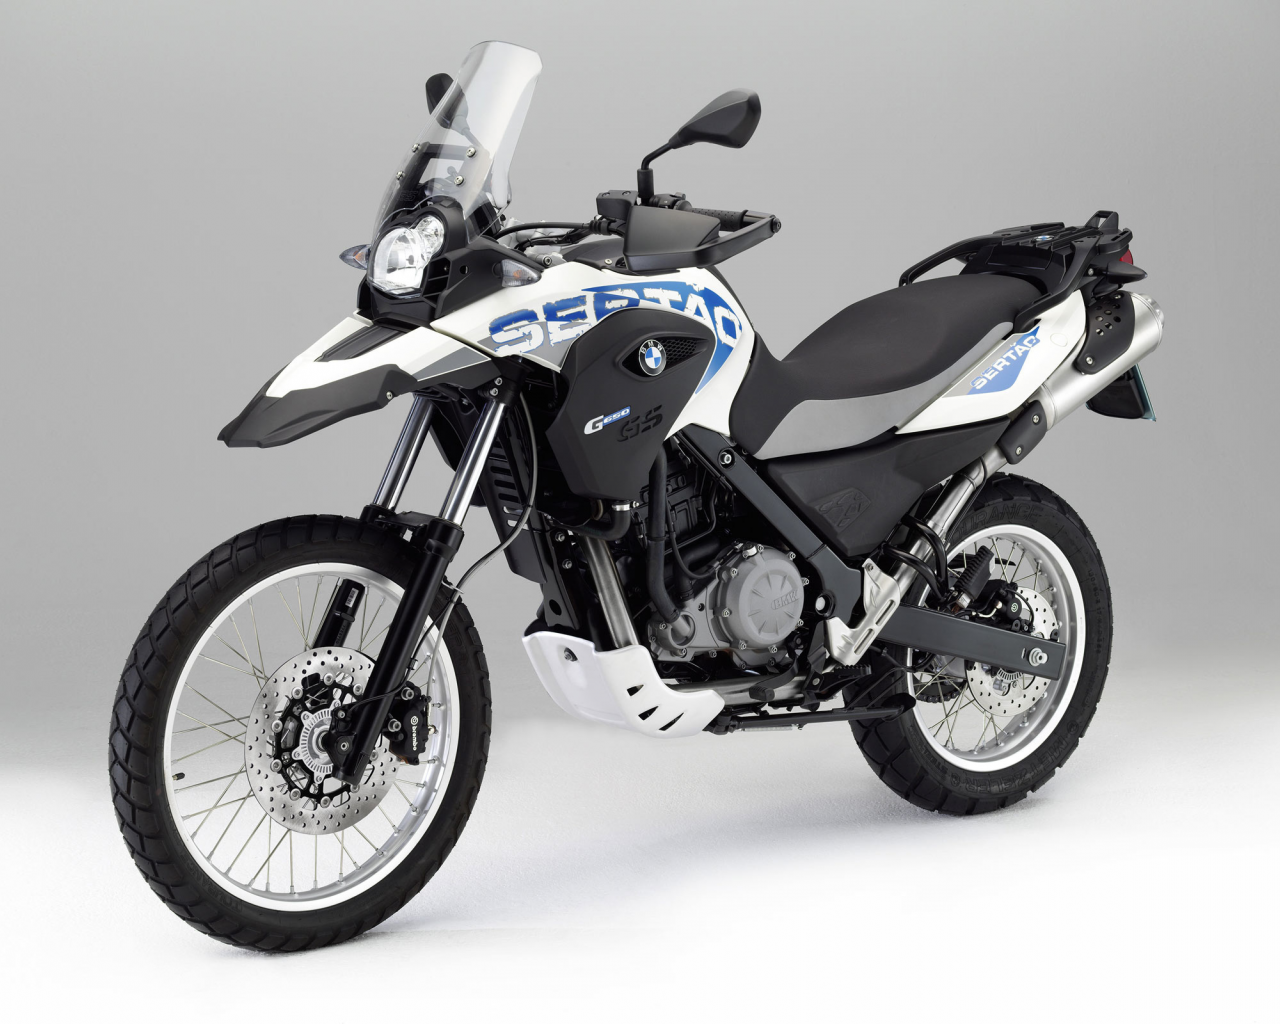 Enduro - Funduro, мото, G 650 GS, BMW, мотоциклы, motorbike, G 650 GS 2012, motorcycle, moto